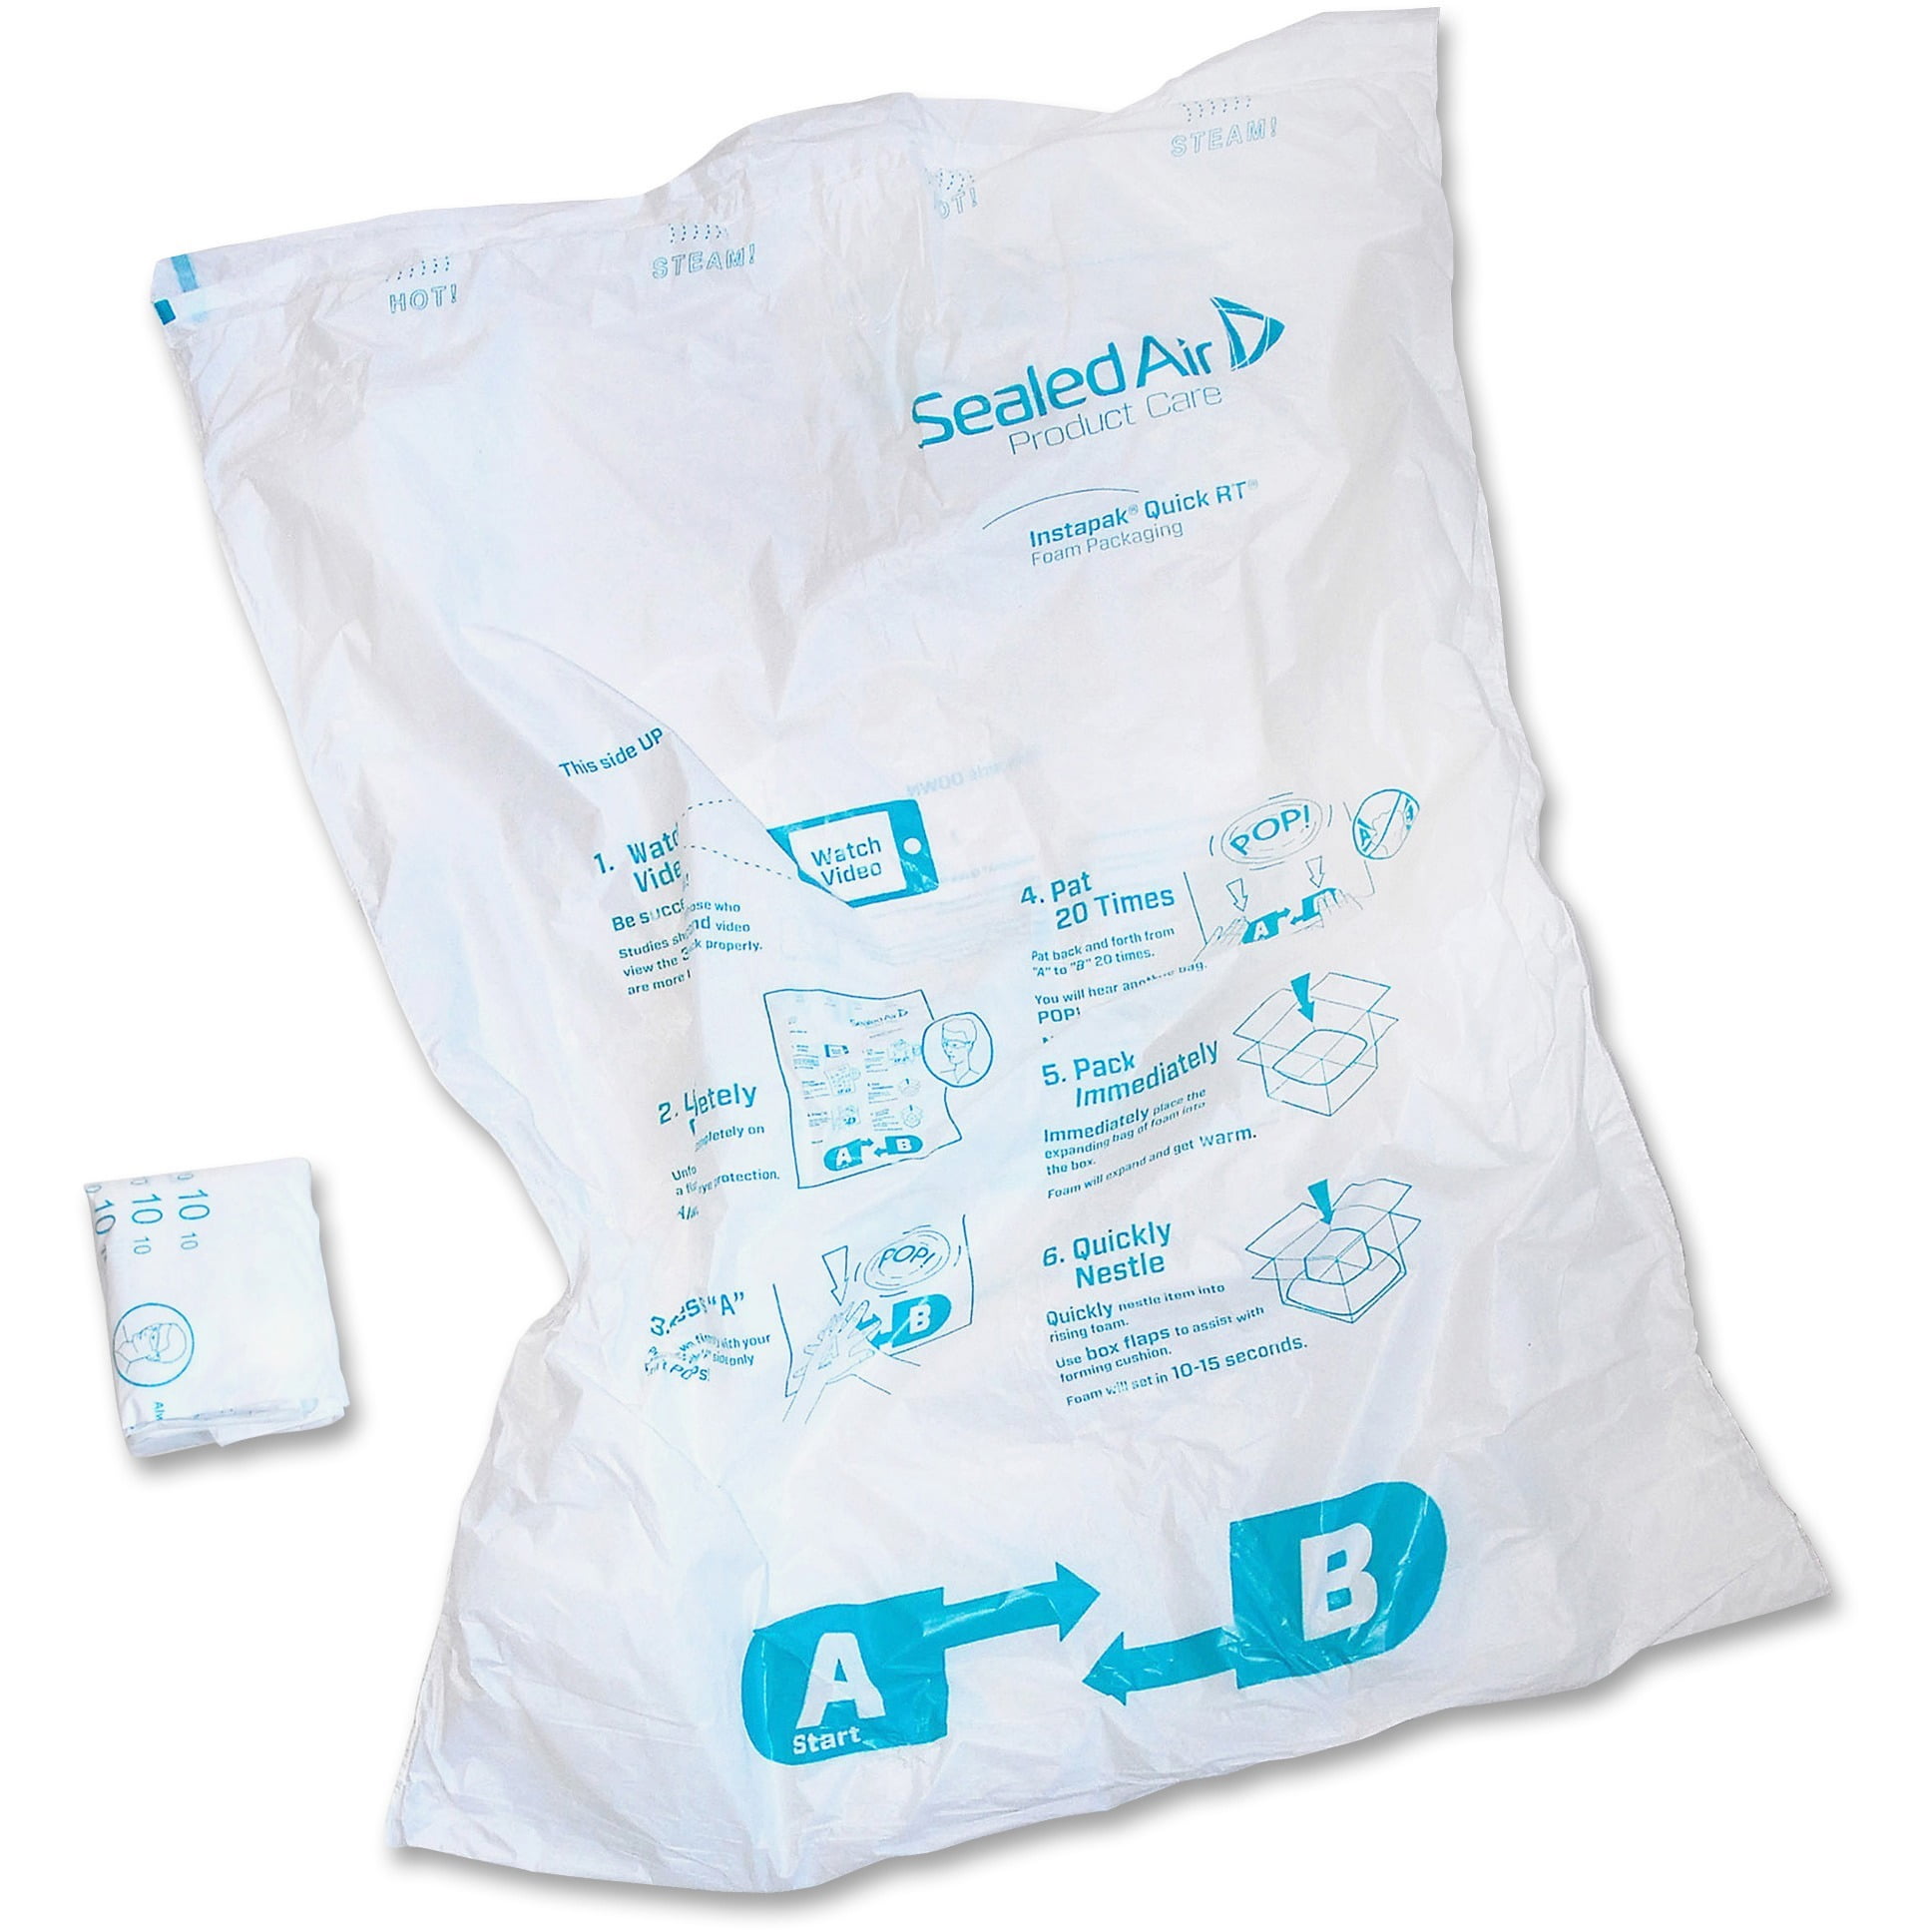 Sealed Air, SEL13011, Instapak Quick RT Foam Packaging, 30 / Carton, Light  Blue 